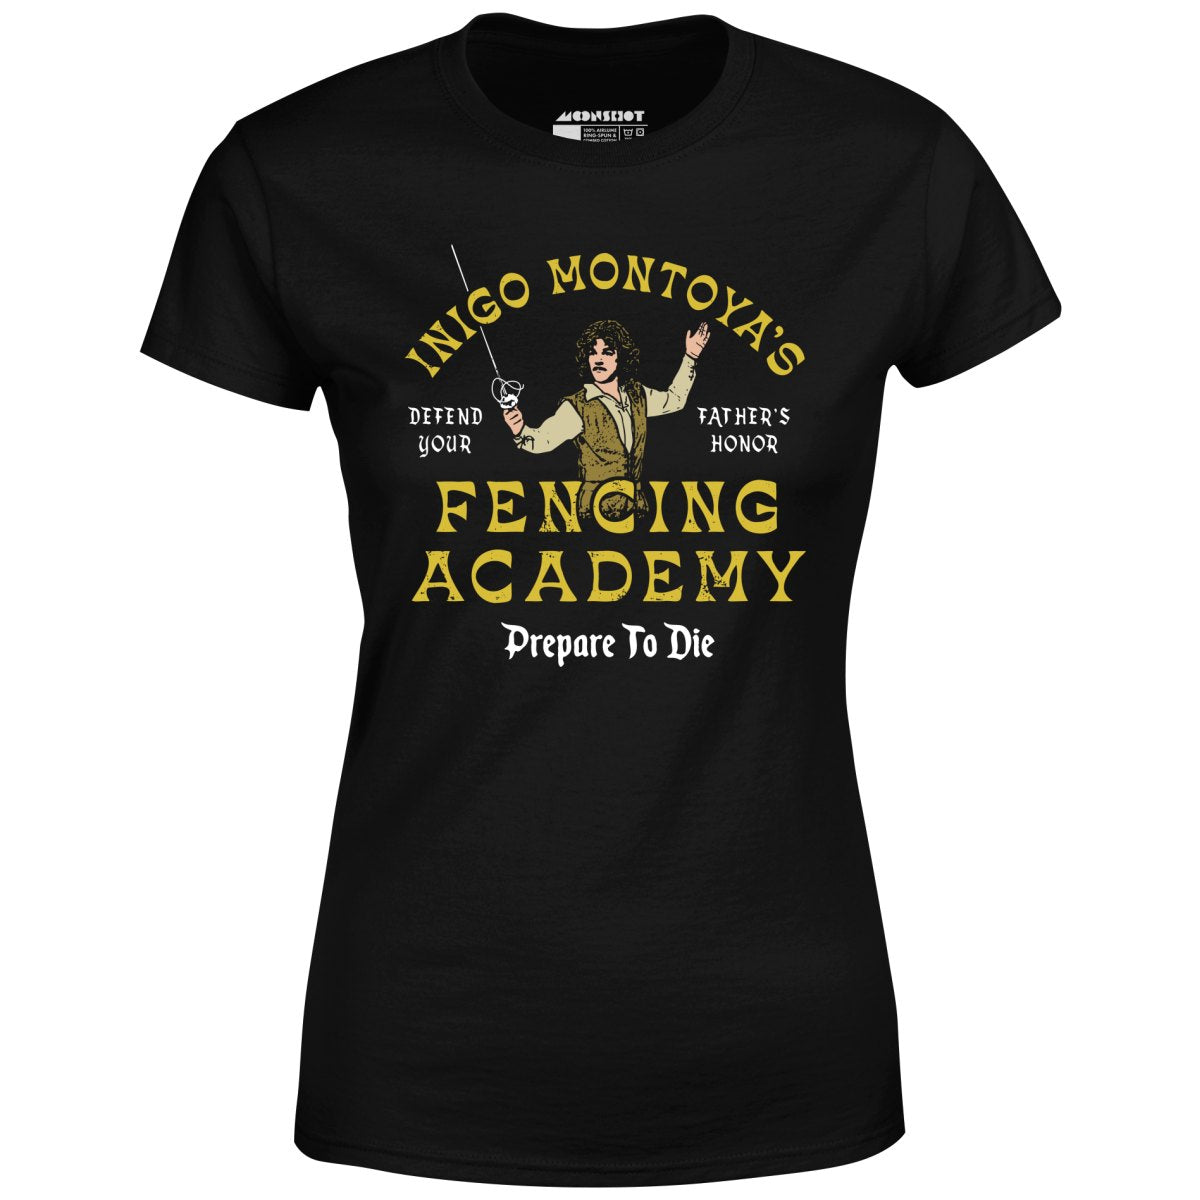 Inigo Montoya's Fencing Academy - Women's T-Shirt